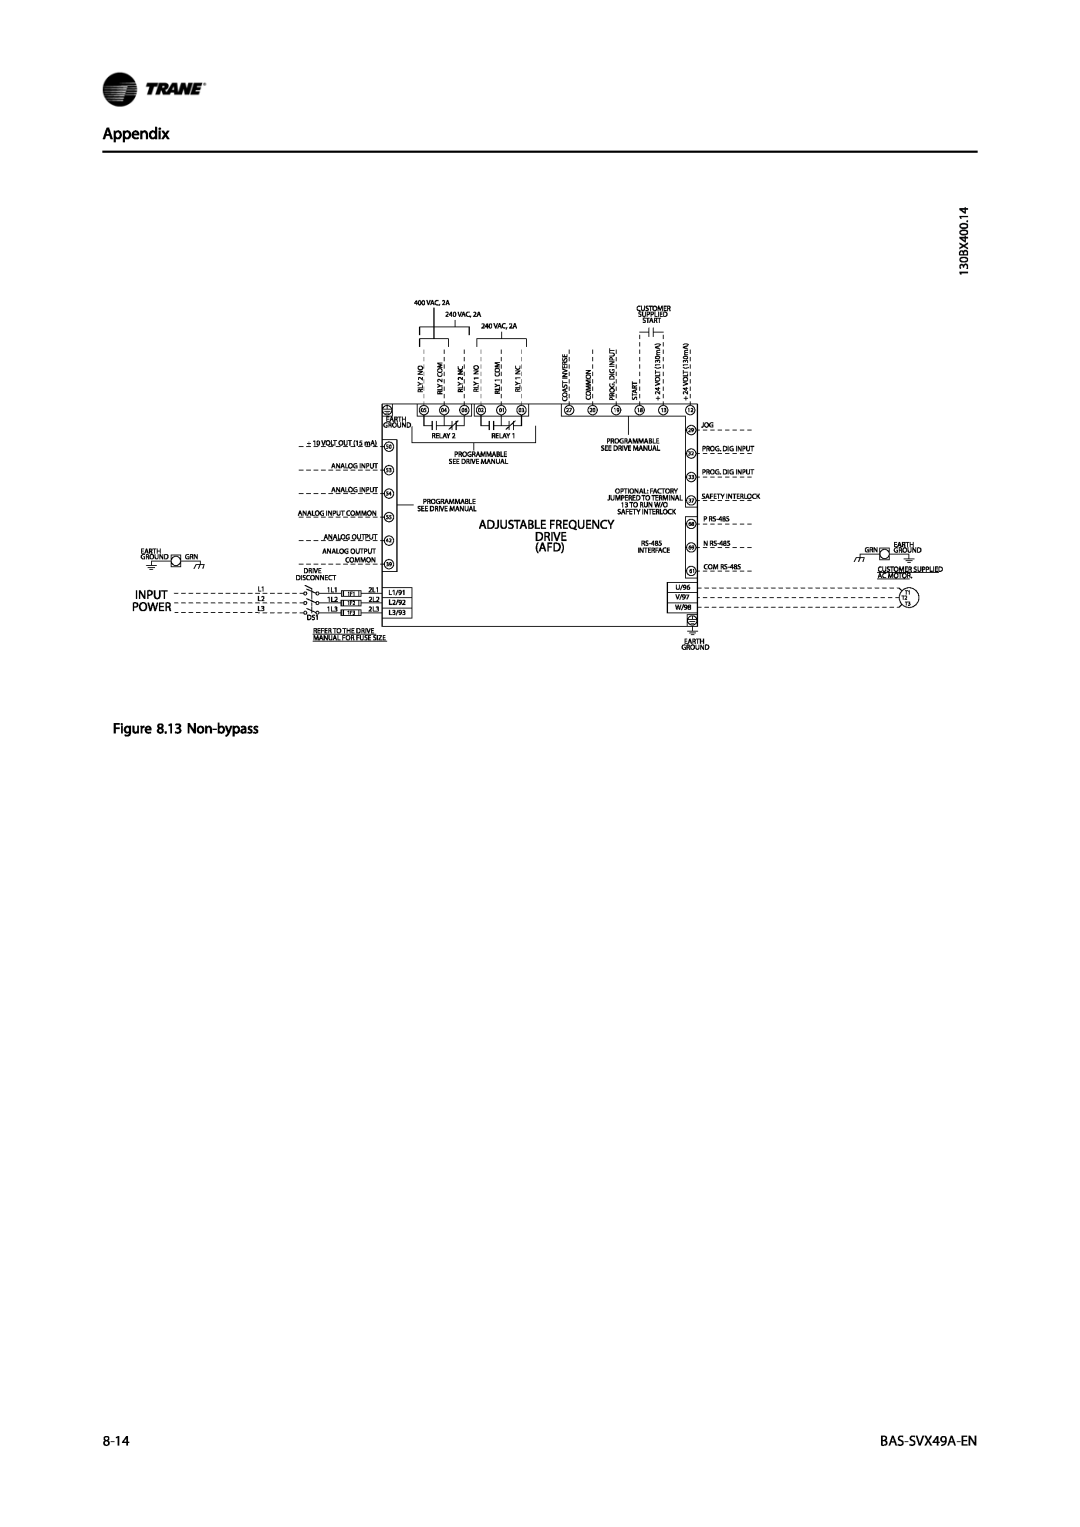 Trane TR200, Vertical Bypass/Non Bypass Panel specifications Appendix, 13 Non-bypass, 8-14, BAS-SVX49A-EN 